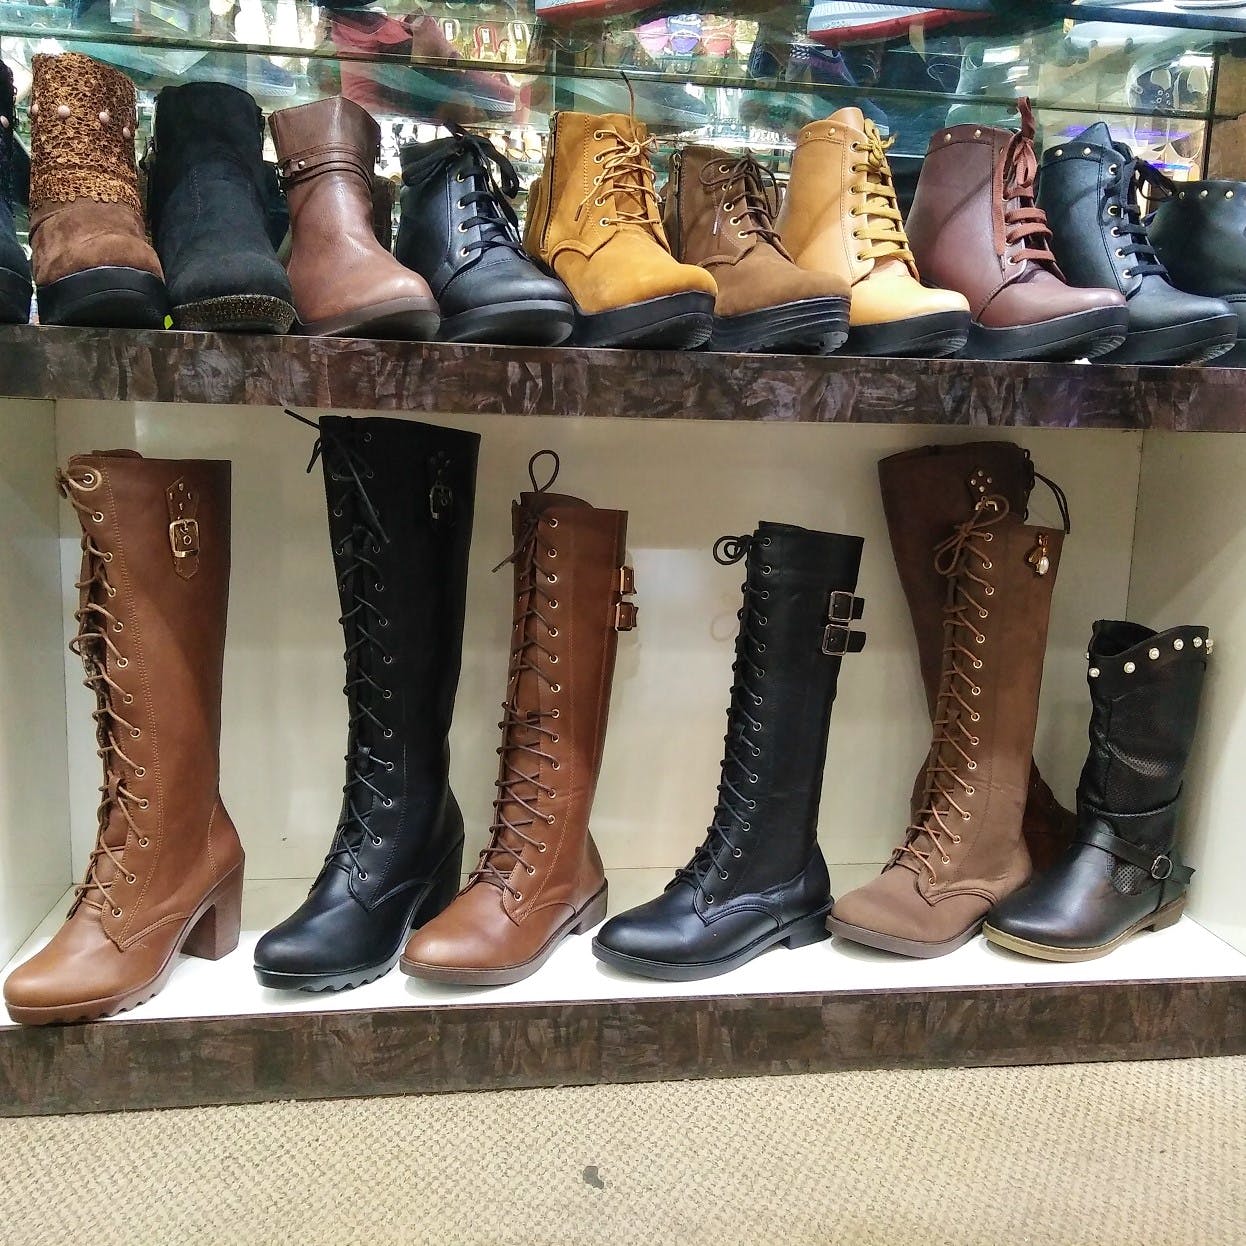 Footwear,Boot,Shoe,Brown,Riding boot,Fashion,Durango boot,Cowboy boot,Shoe store,Motorcycle boot